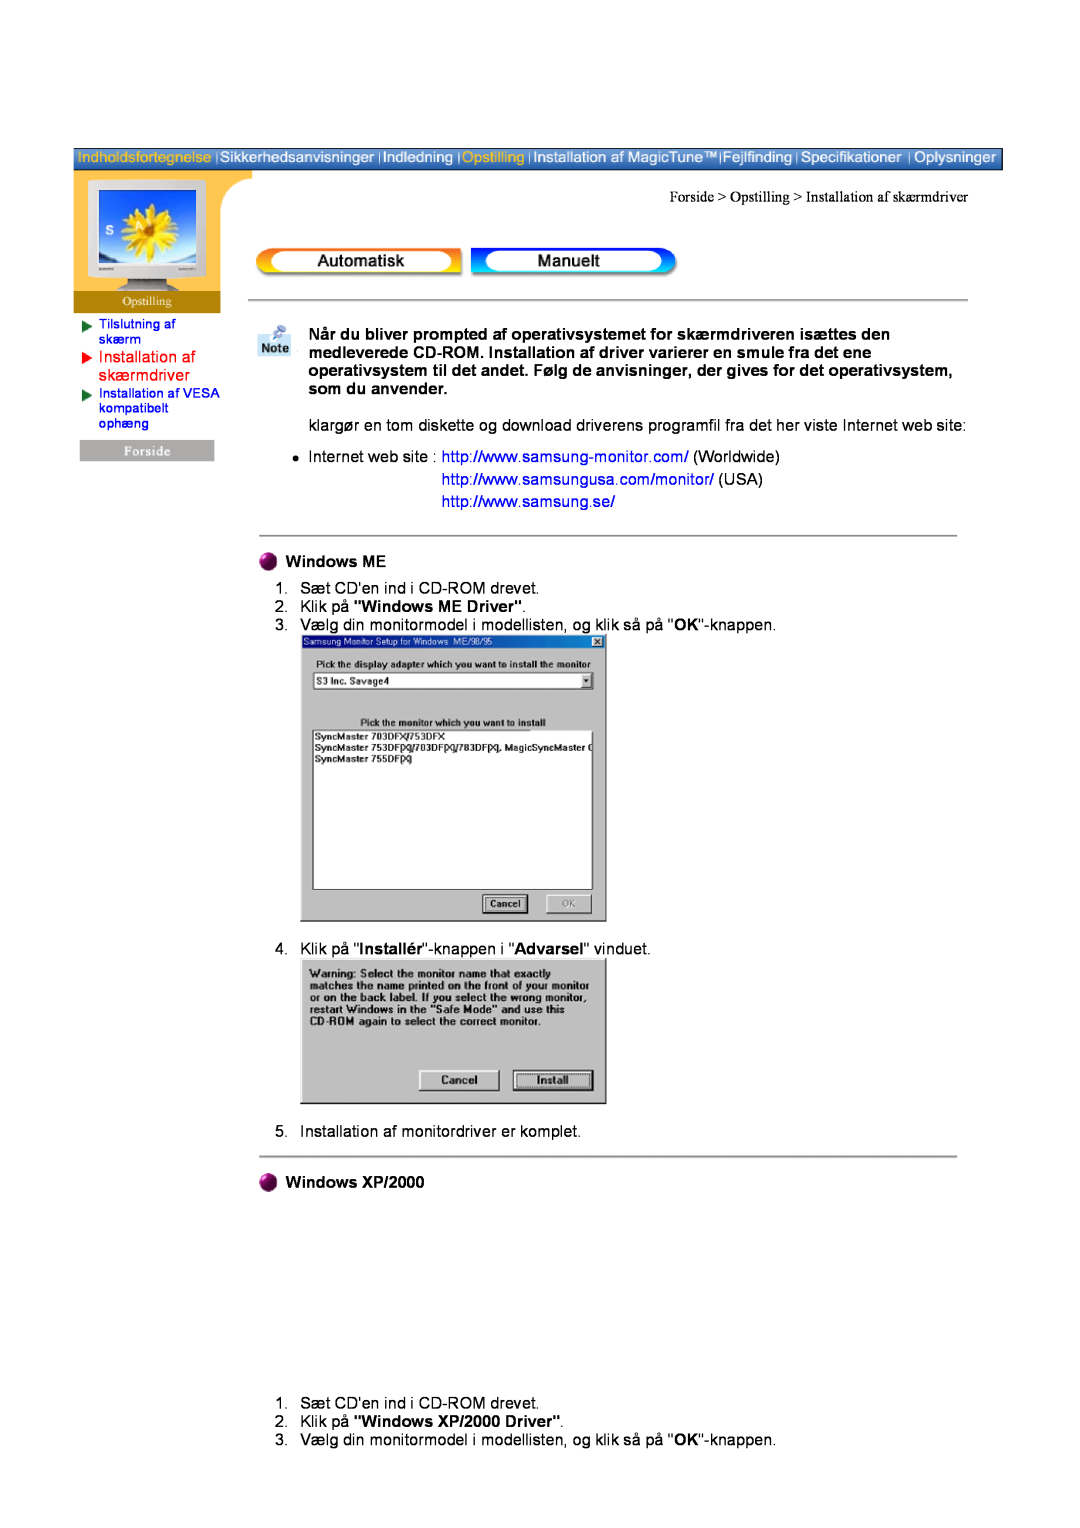 Samsung DI19PSQFV/EDC, DI19PSQAQ/EDC manual Installation af skærmdriver, Klik på Windows ME Driver, Windows XP/2000 